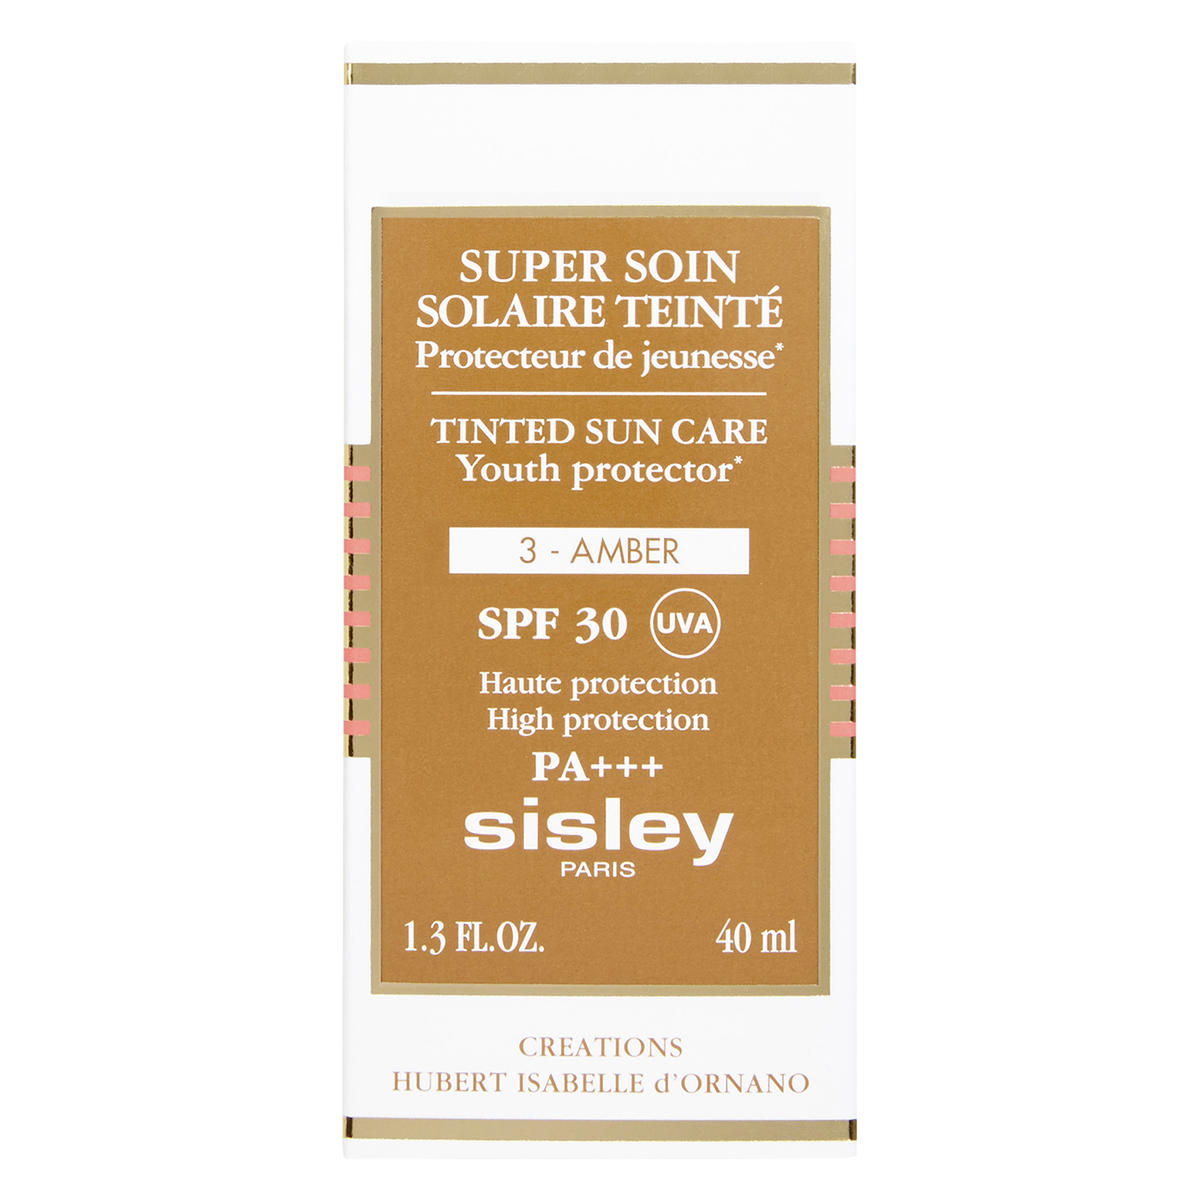 Sisley Paris Super Soin Solaire Teinté SPF 30 3 Amber, 40 ml - 3